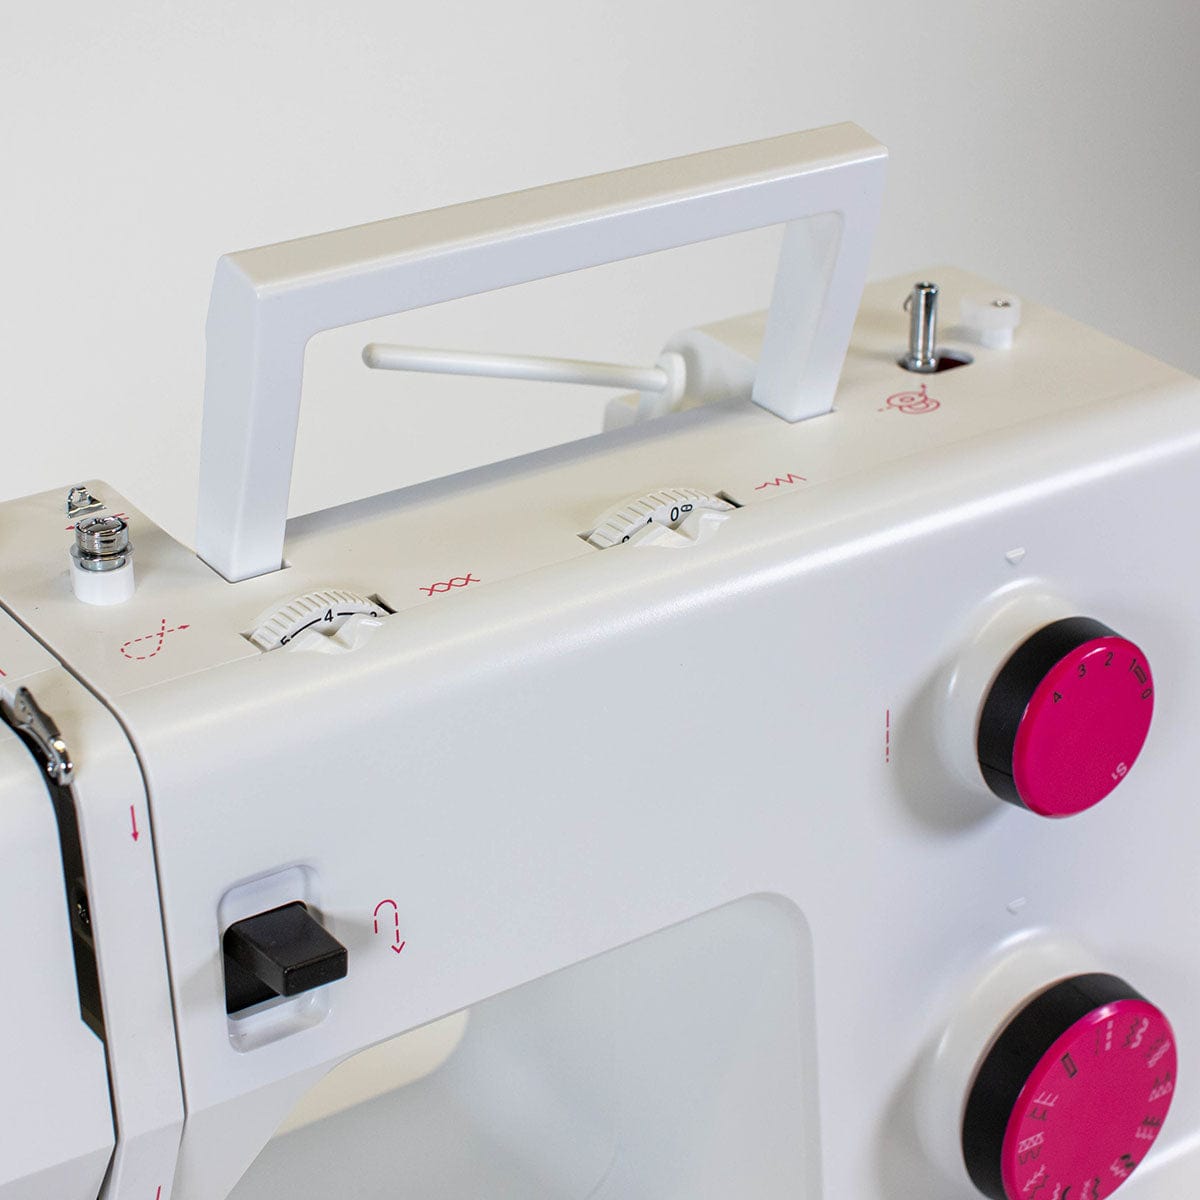 Pfaff Smarter 160s Sewing Machine + FREE Gifts worth £74